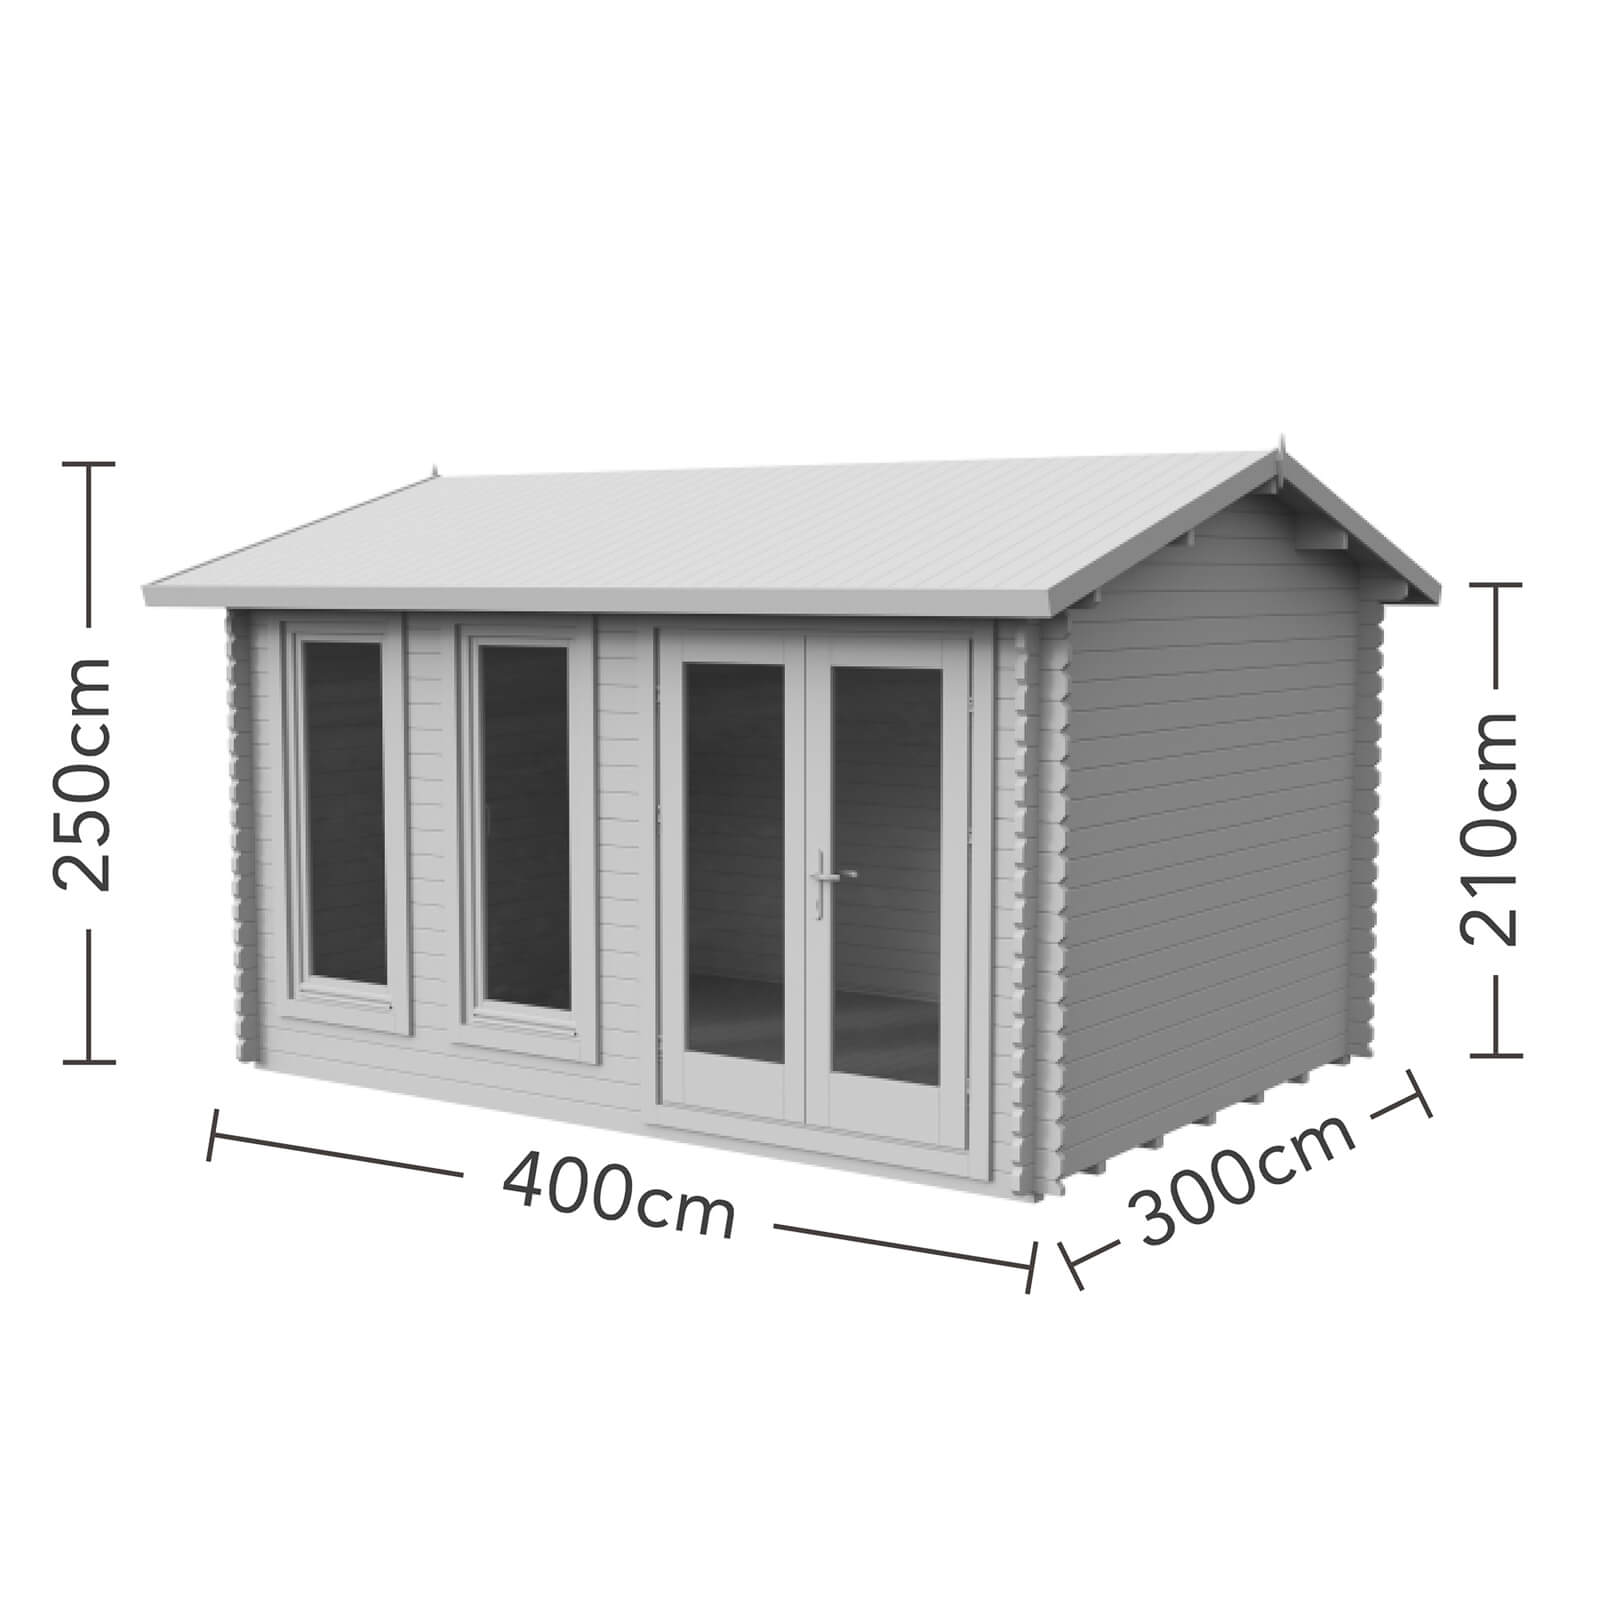 Forest Chiltern 4.0m x 3.0m Log Cabin Single Glazed 24kg Felt, Plus Underlay - Installation Included